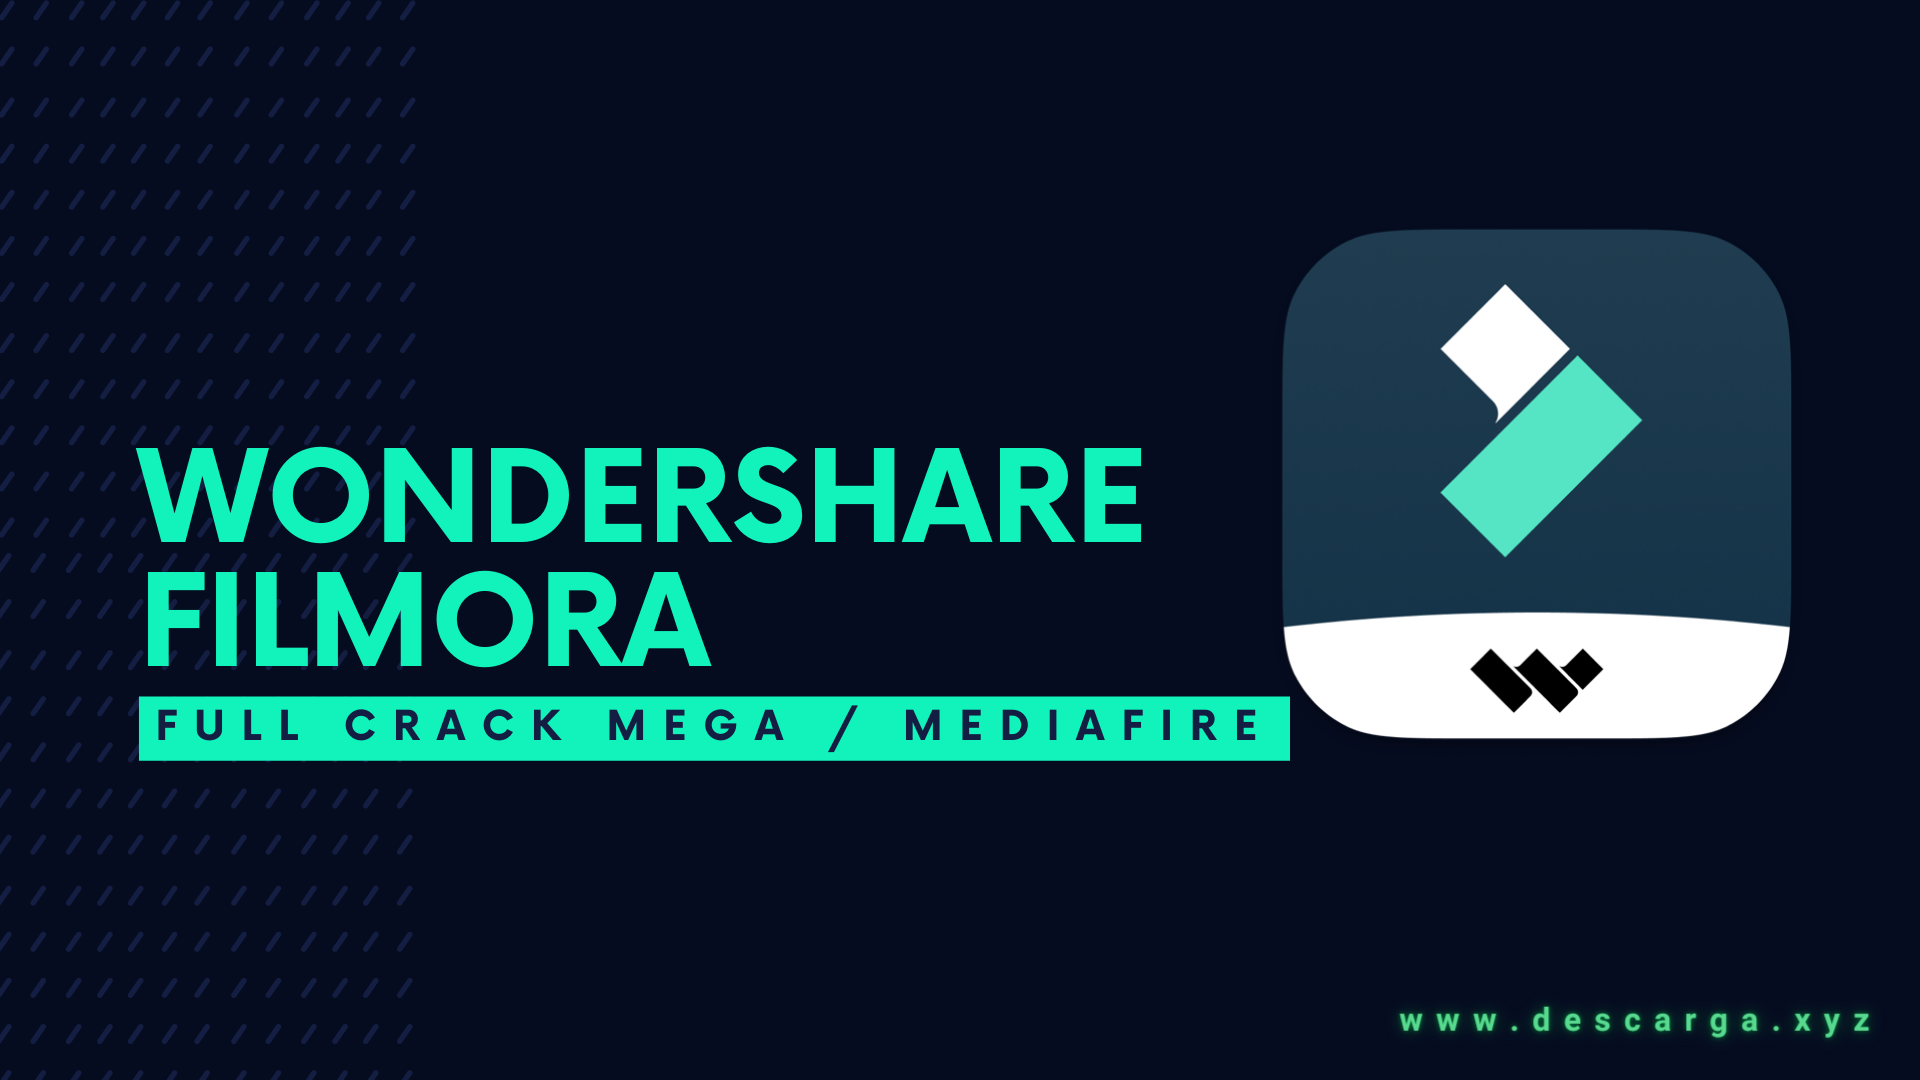 Download 🥇 Wondershare Filmora v13.3.12 FULL! CRACK! ✅ MEGA